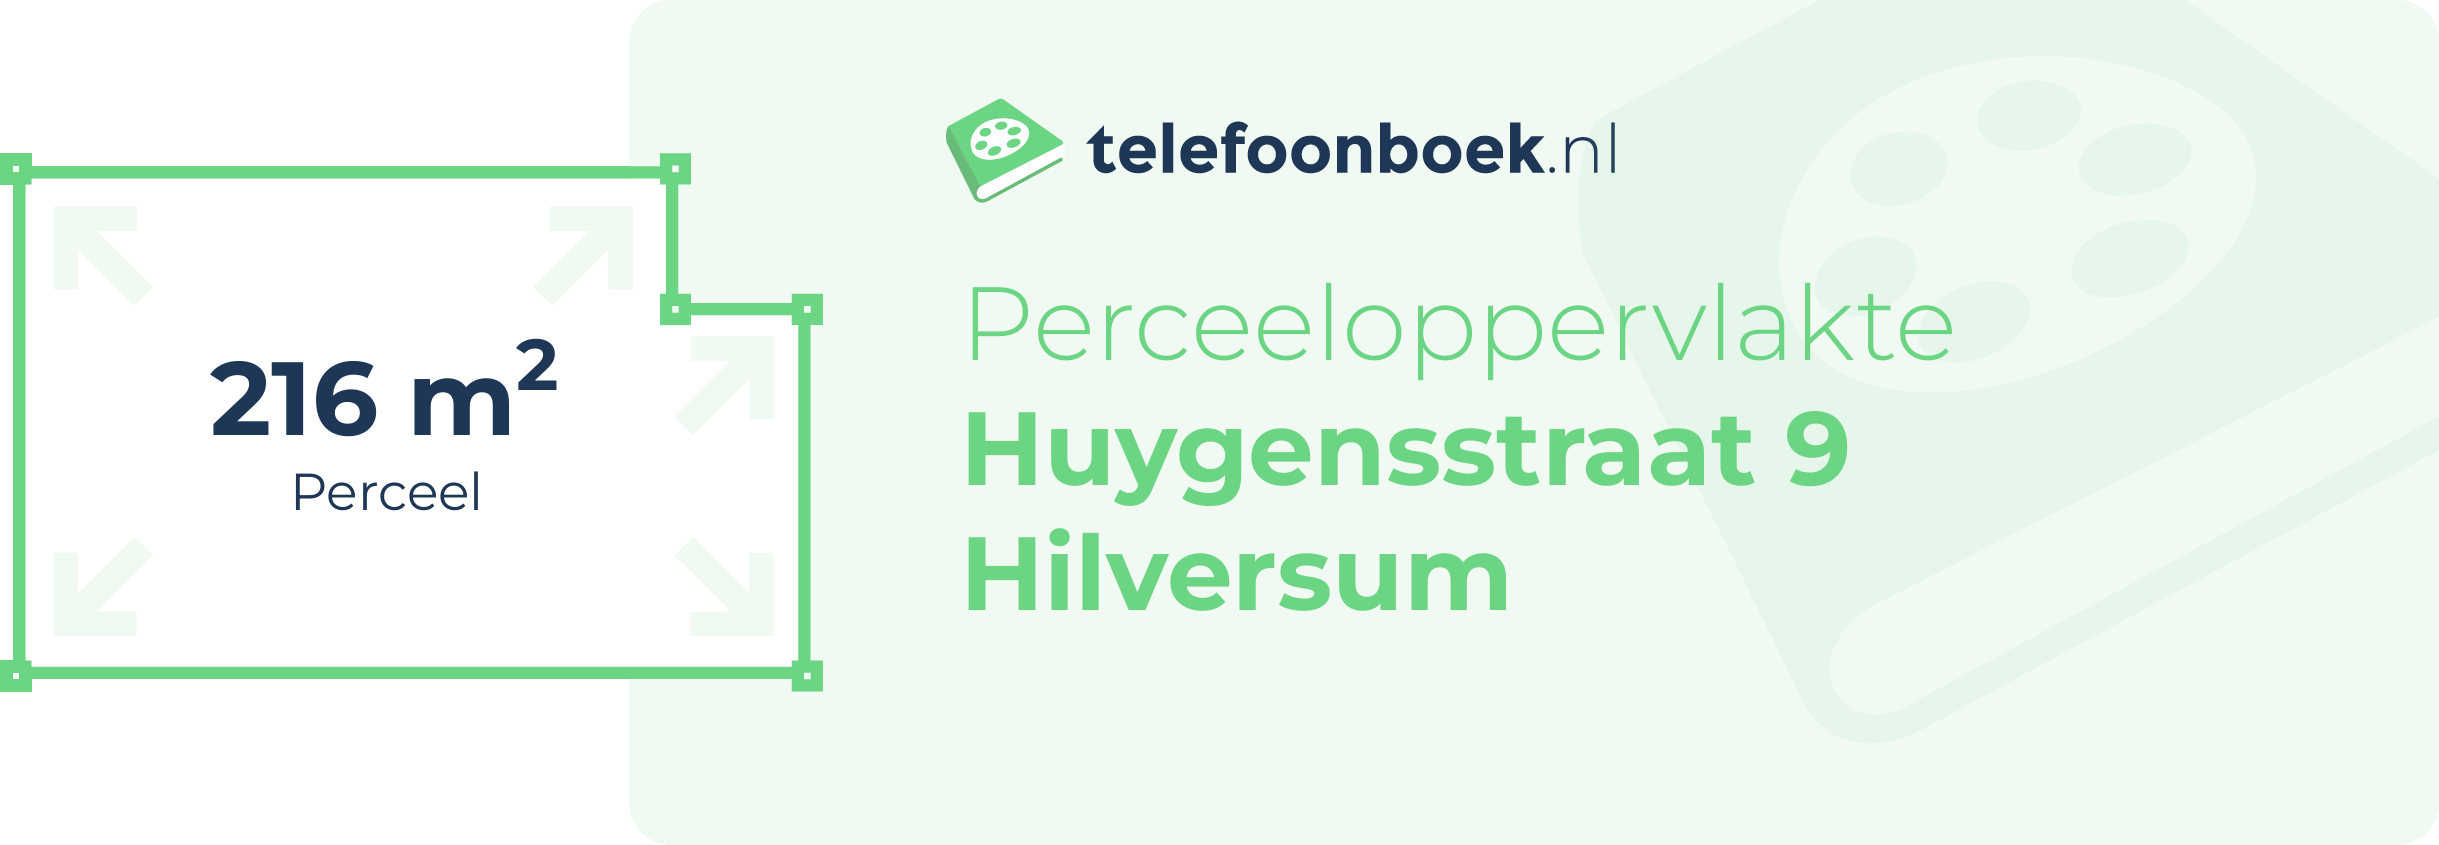 Perceeloppervlakte Huygensstraat 9 Hilversum